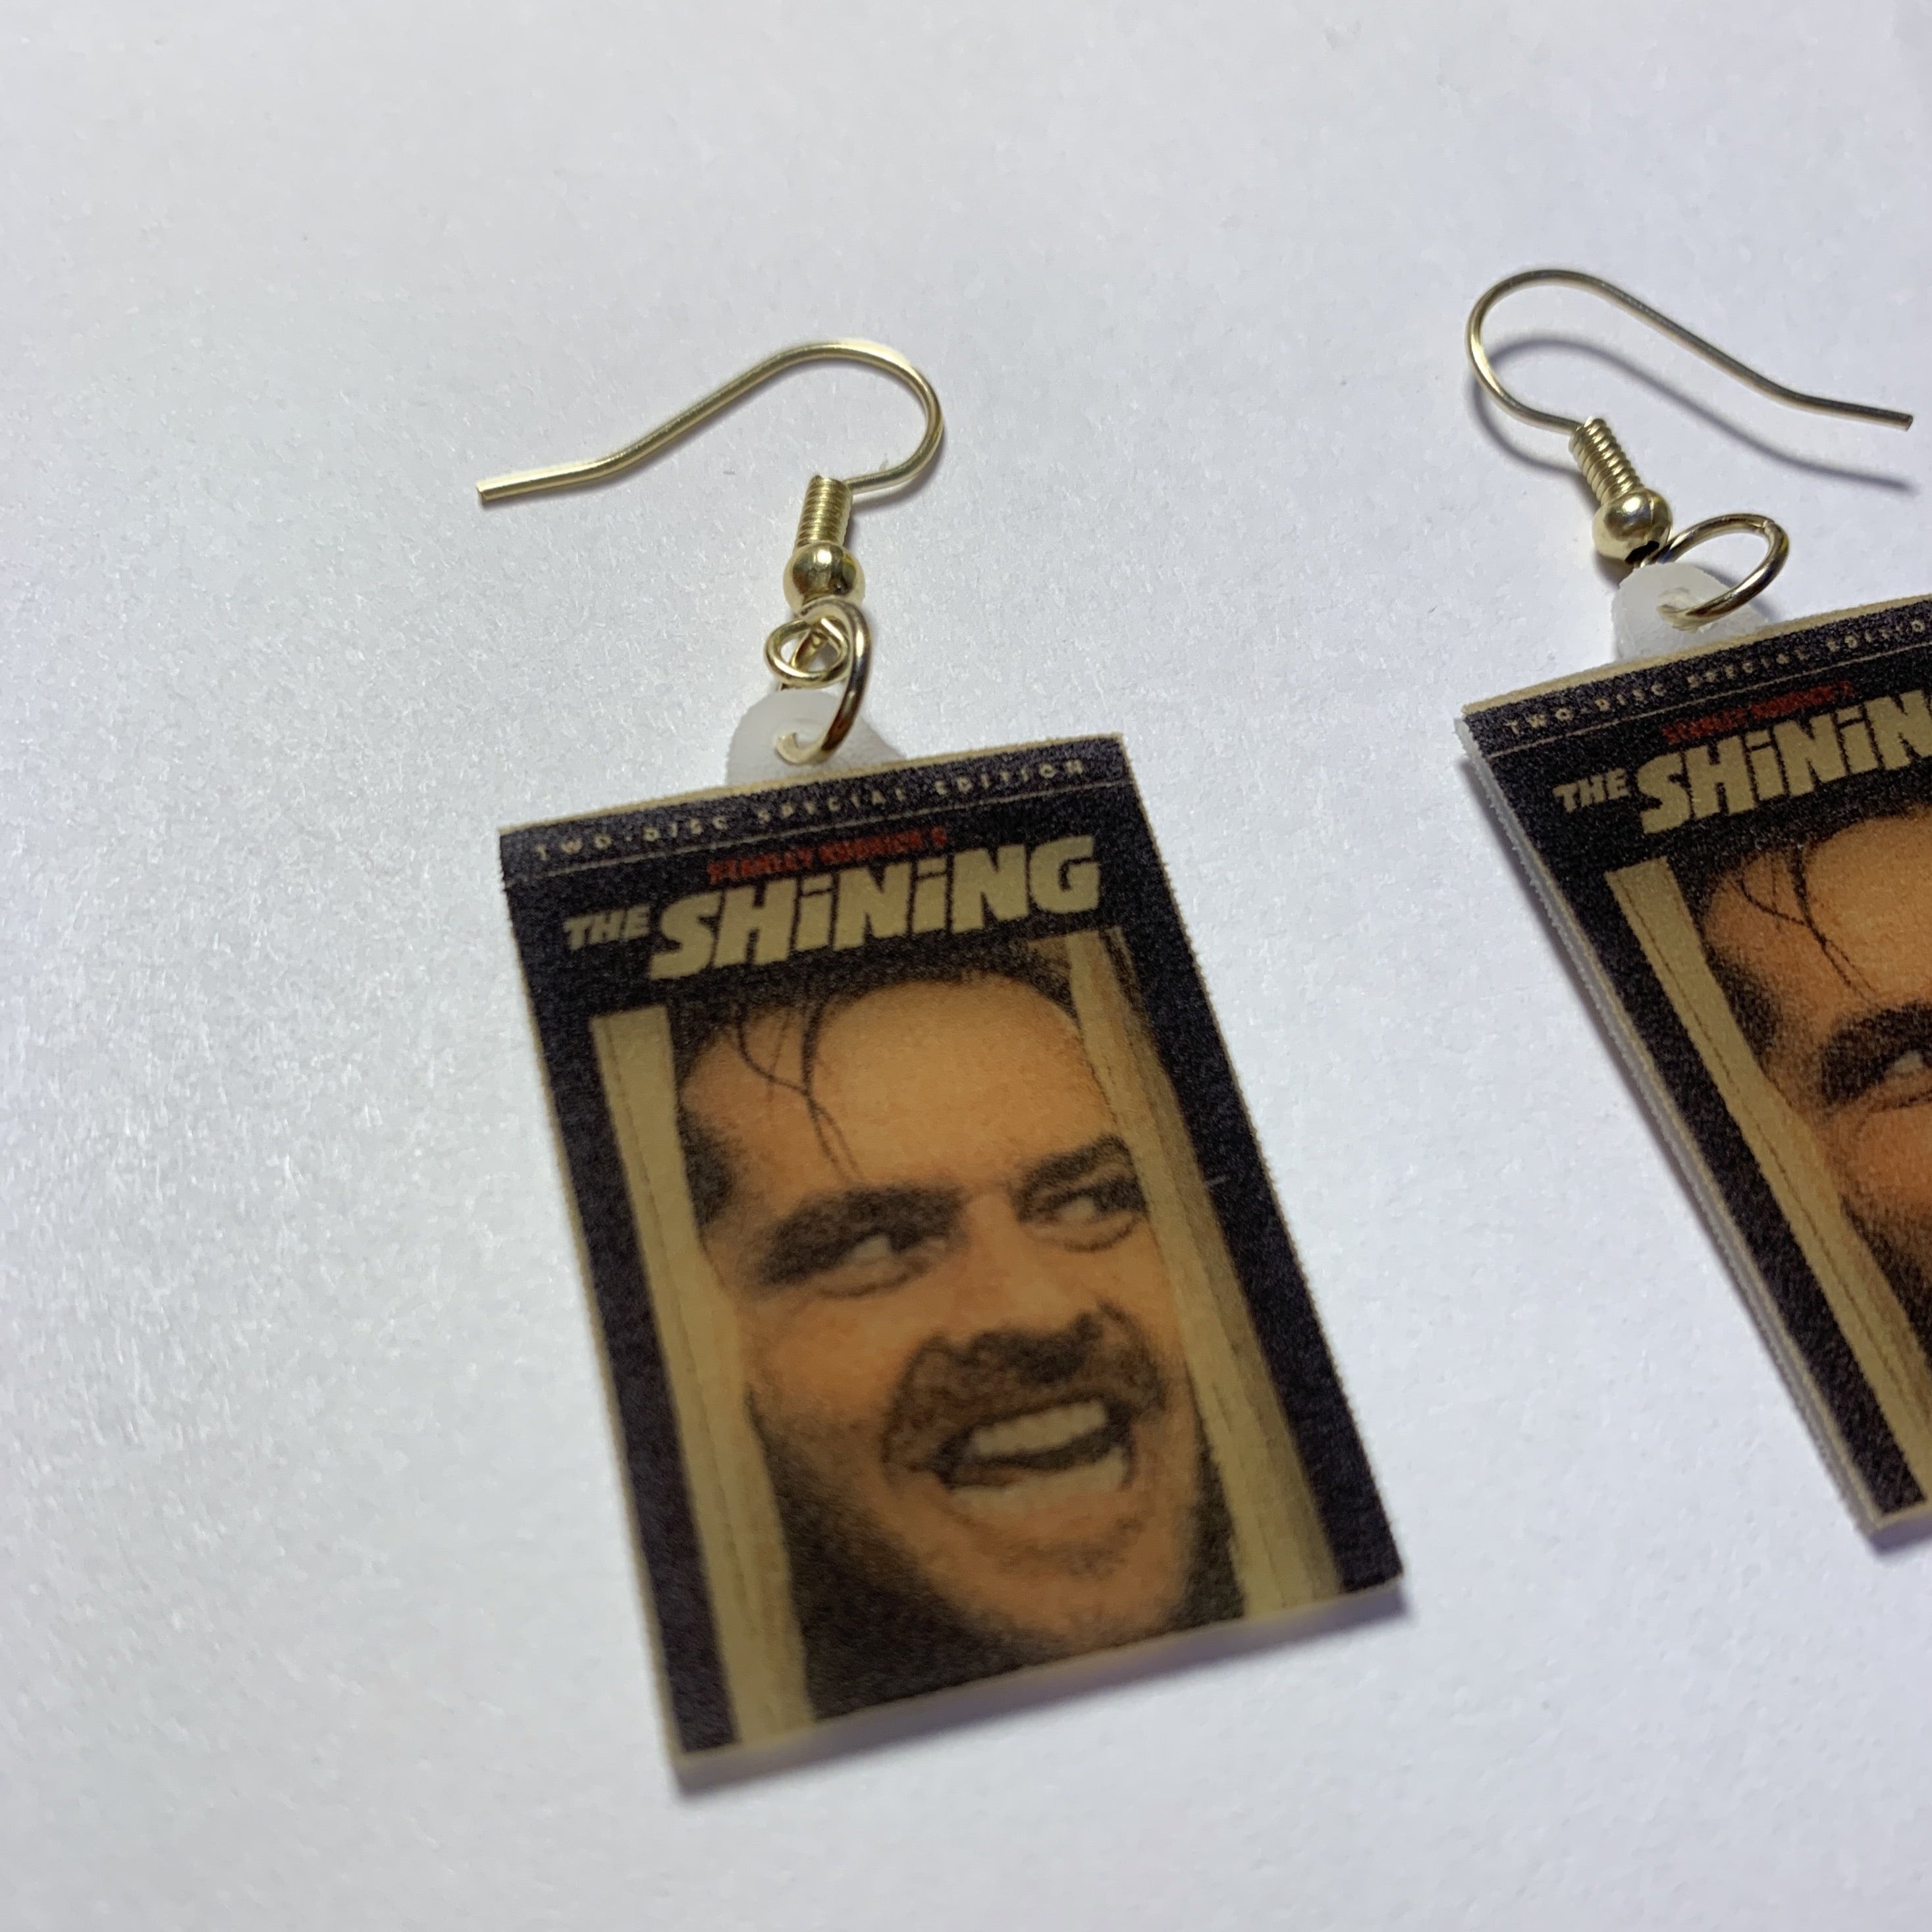 The Shining Movie Poster Handmade Earrings!